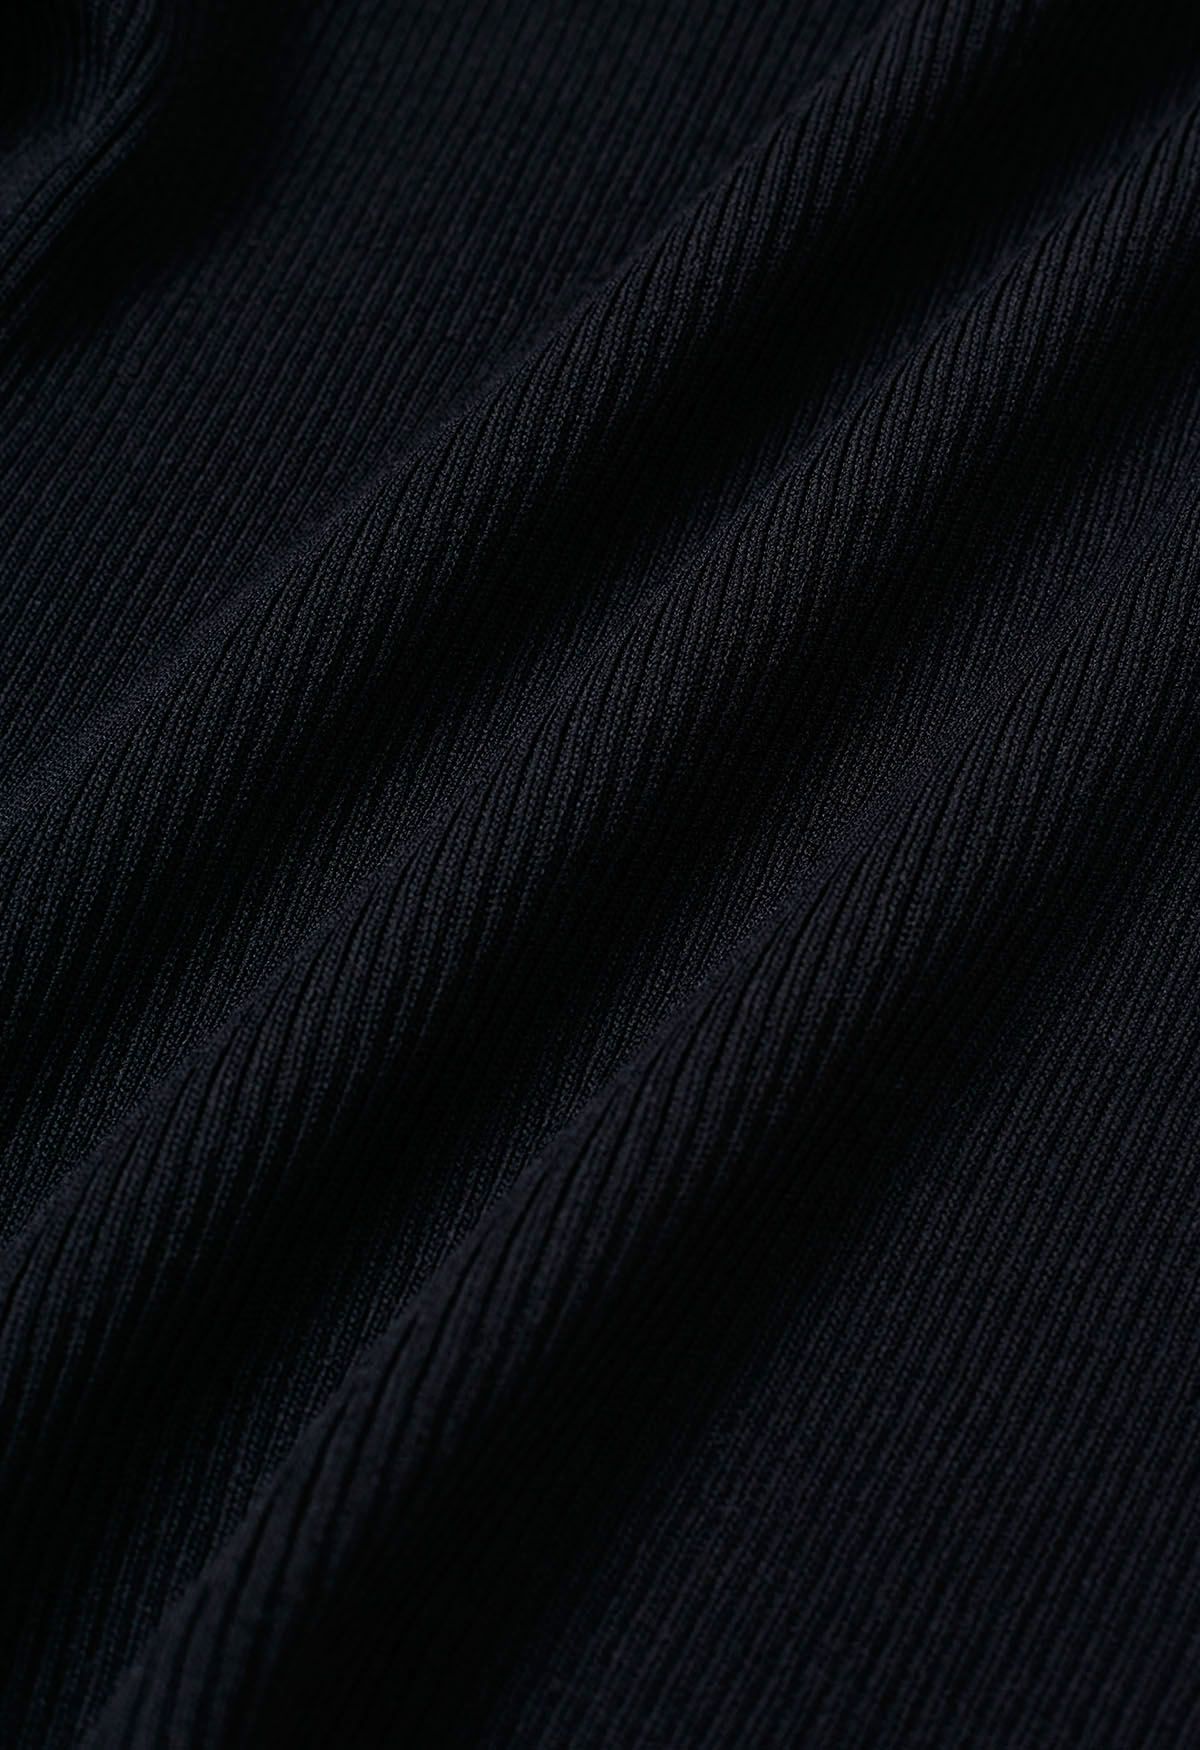 Cutwork Lace Flutter Sleeves Spliced Knit Top in Black